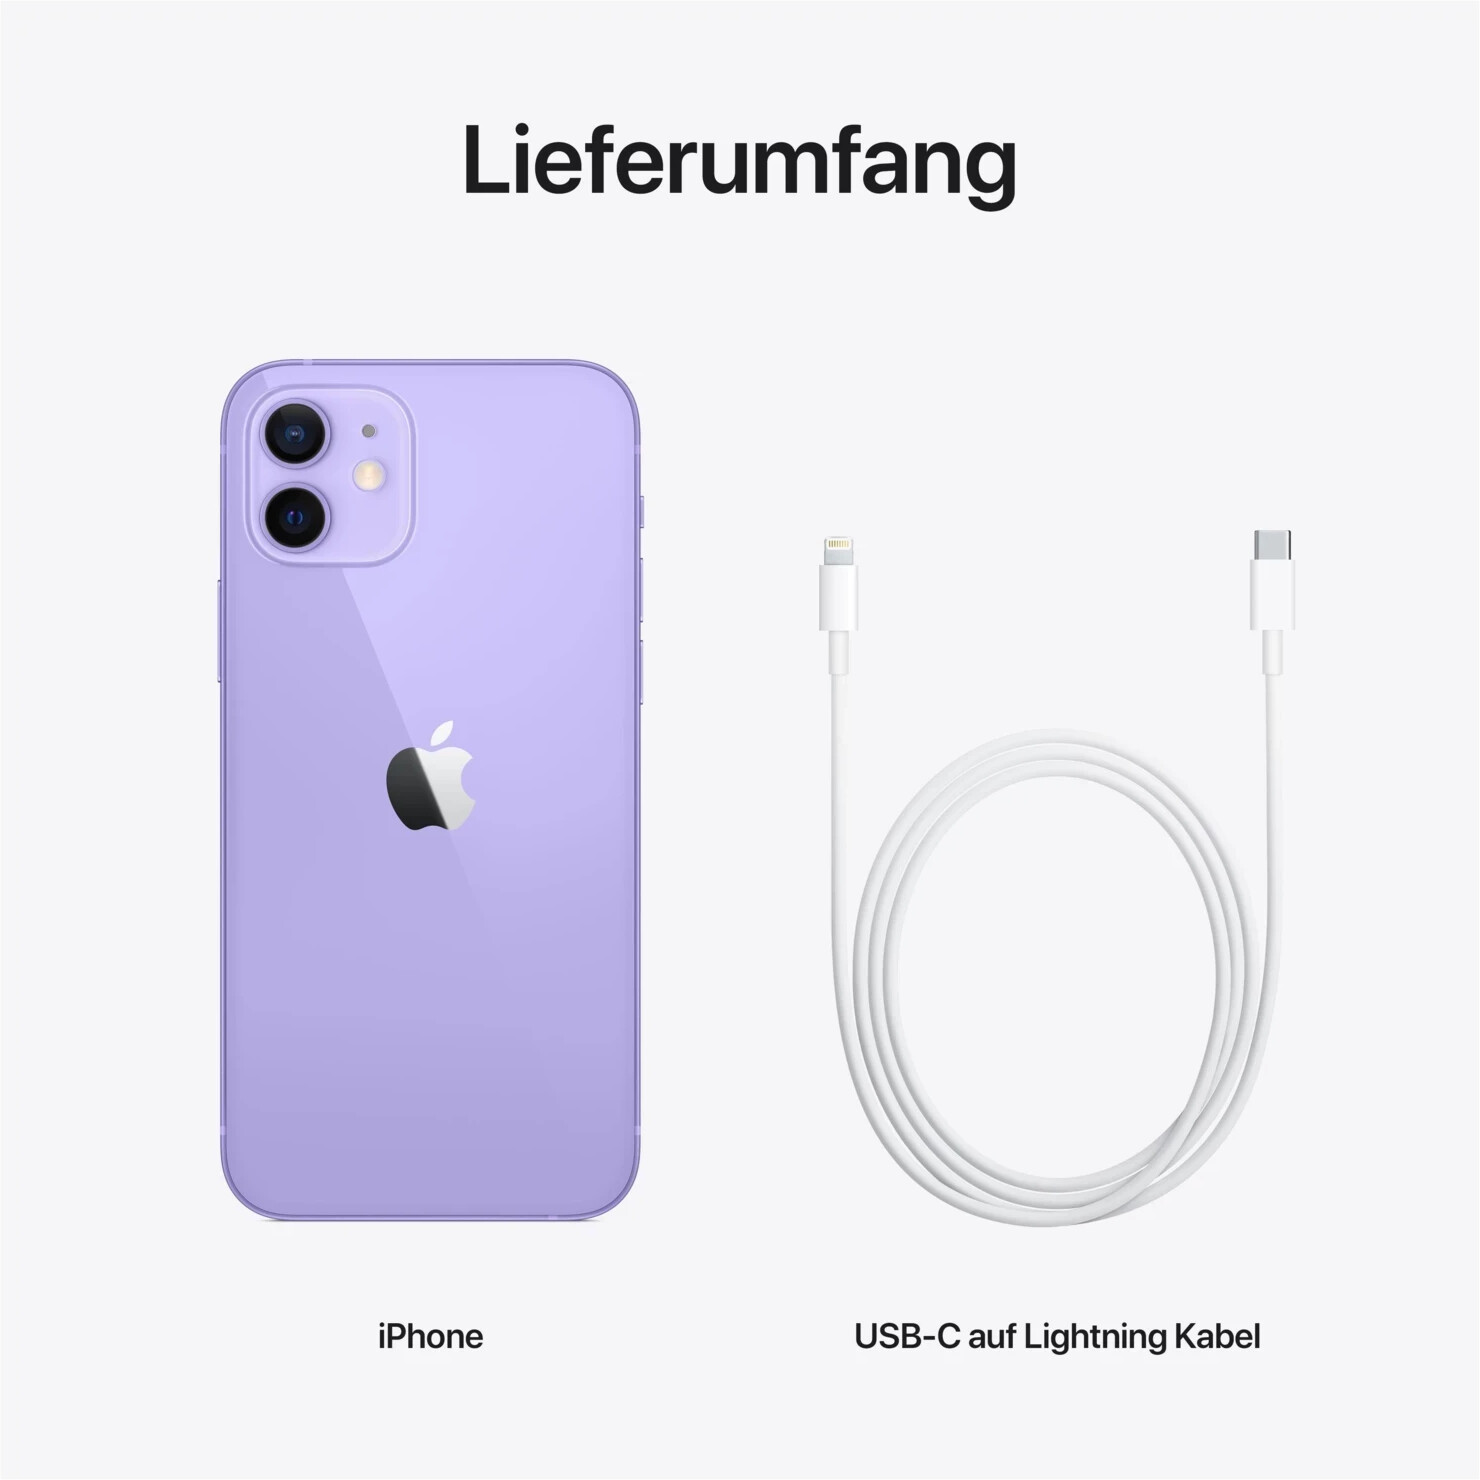 Apple iPhone 12 mini 256GB Violett Handy